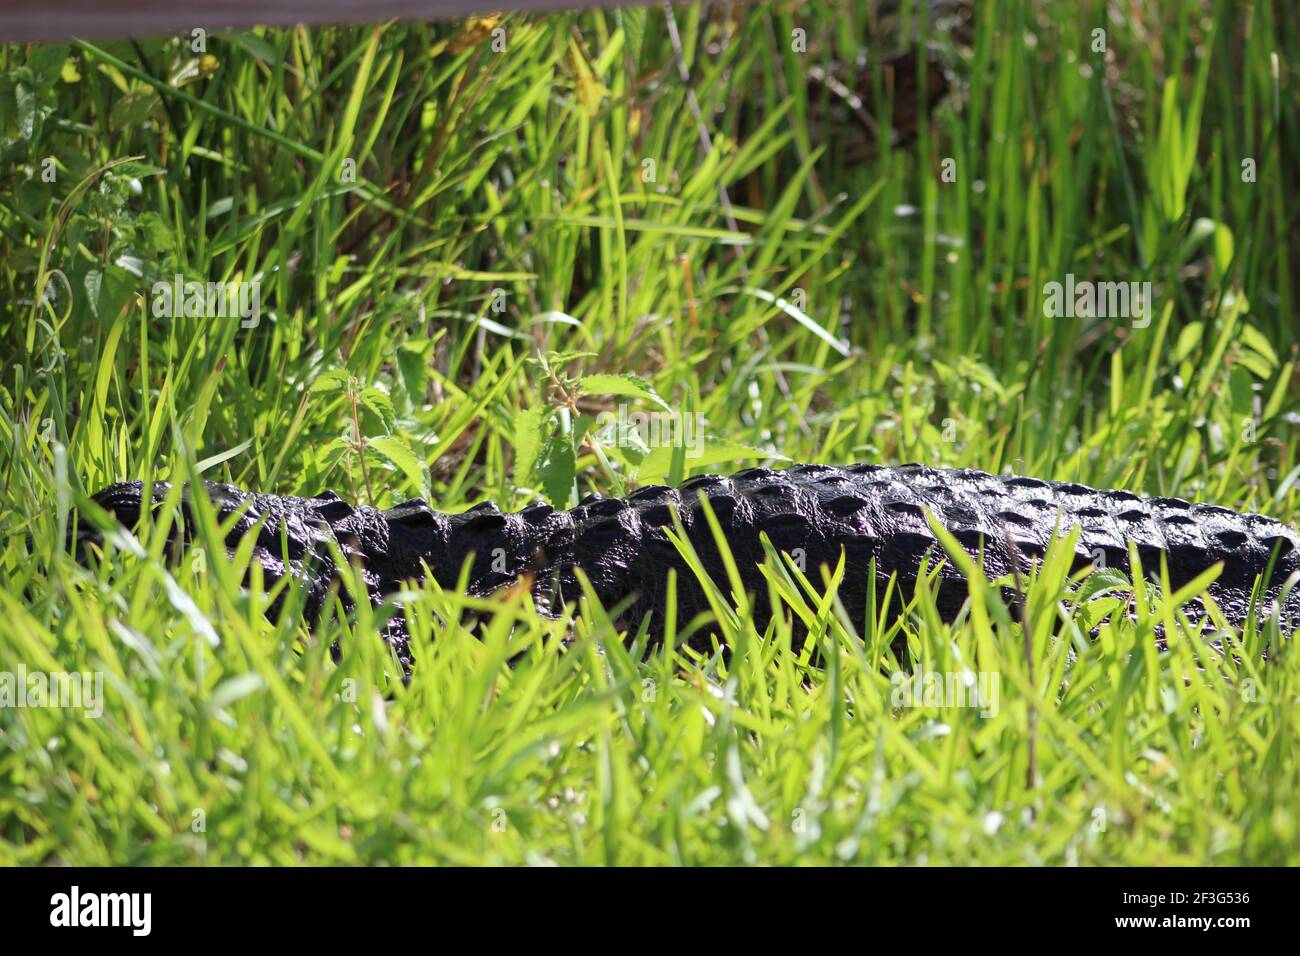 Alligator hiding in the grass. Stock Photo